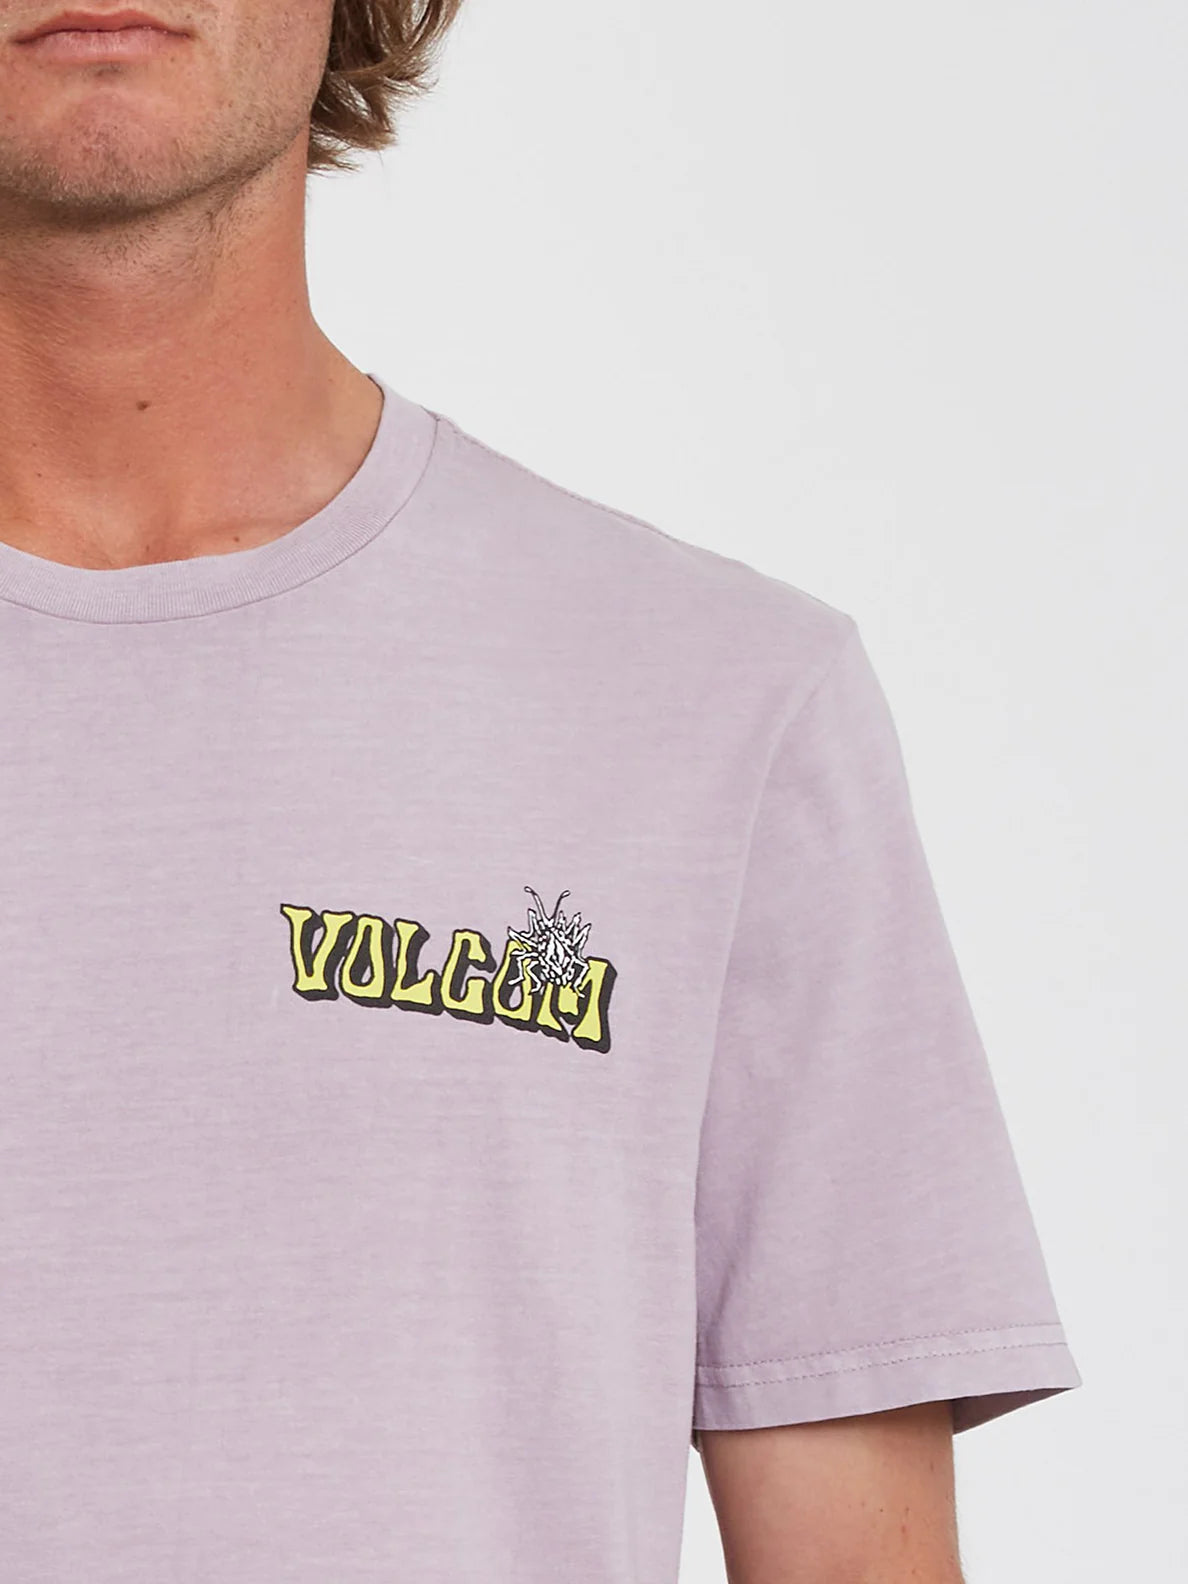 Camiseta Volcom Widgets Nirvana